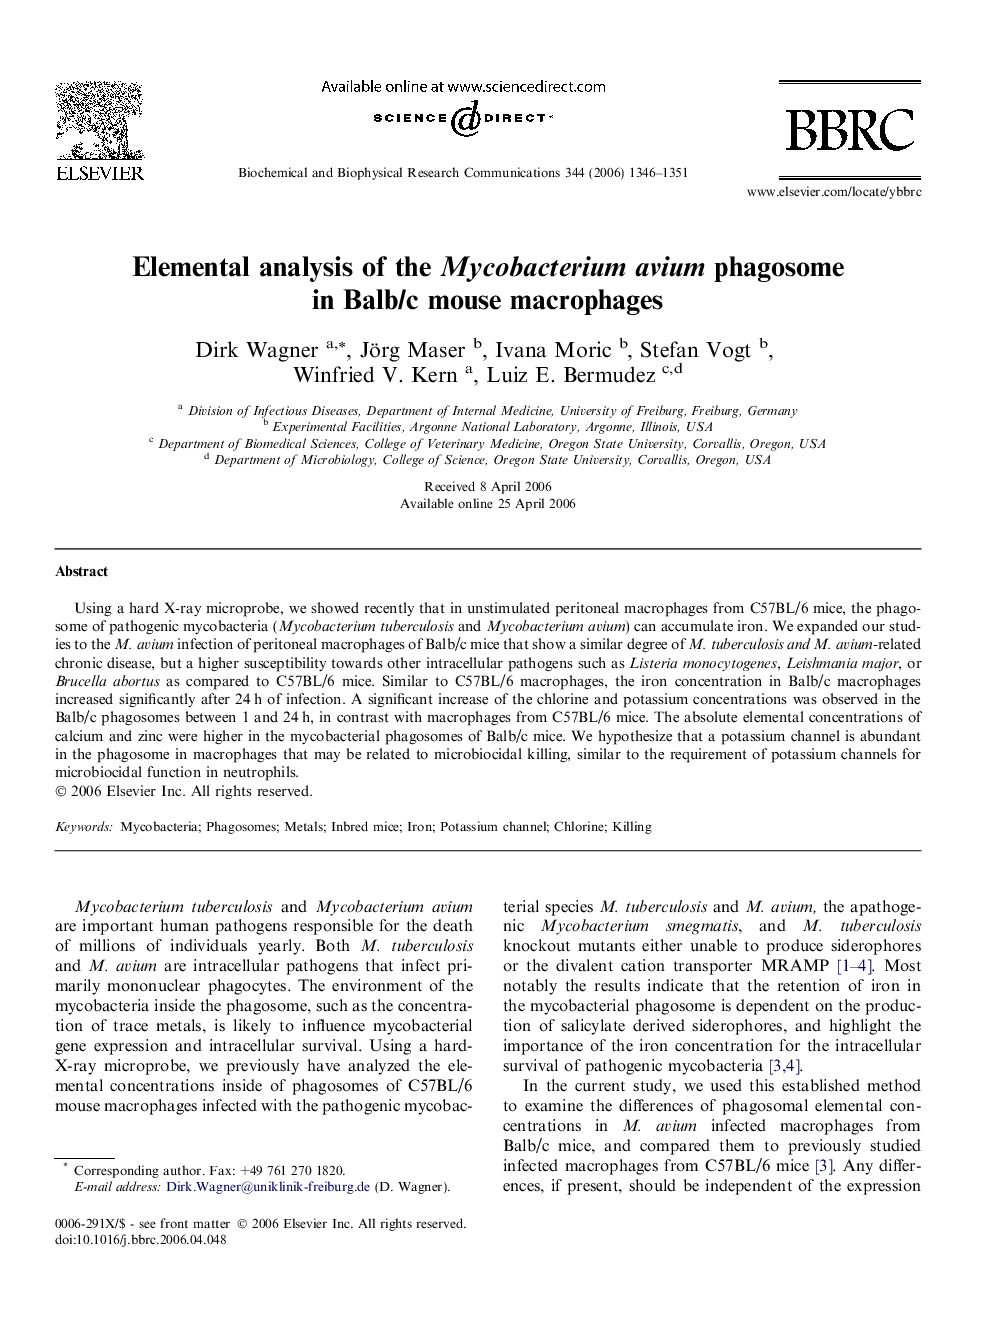 Elemental analysis of the Mycobacterium avium phagosome in Balb/c mouse macrophages